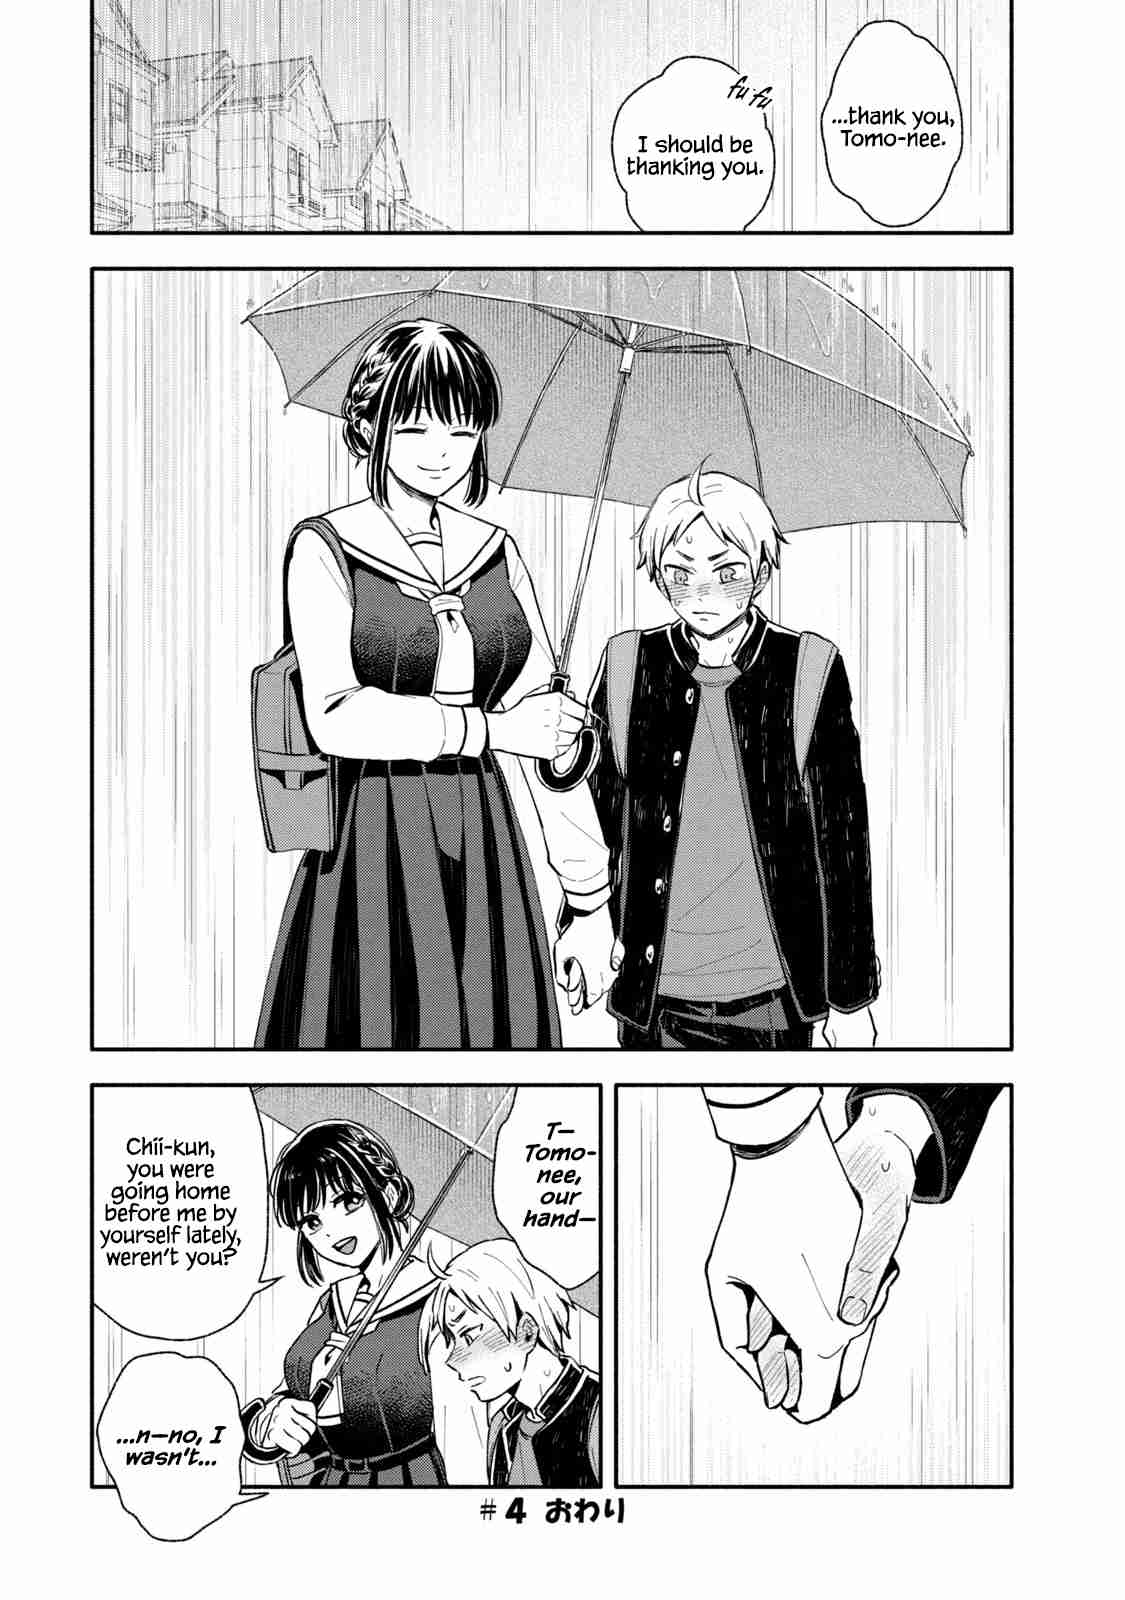 Ookiku Nattara Kekkon Suru! Vol. 1 Ch. 4 A Show of Courage with an Umbrella